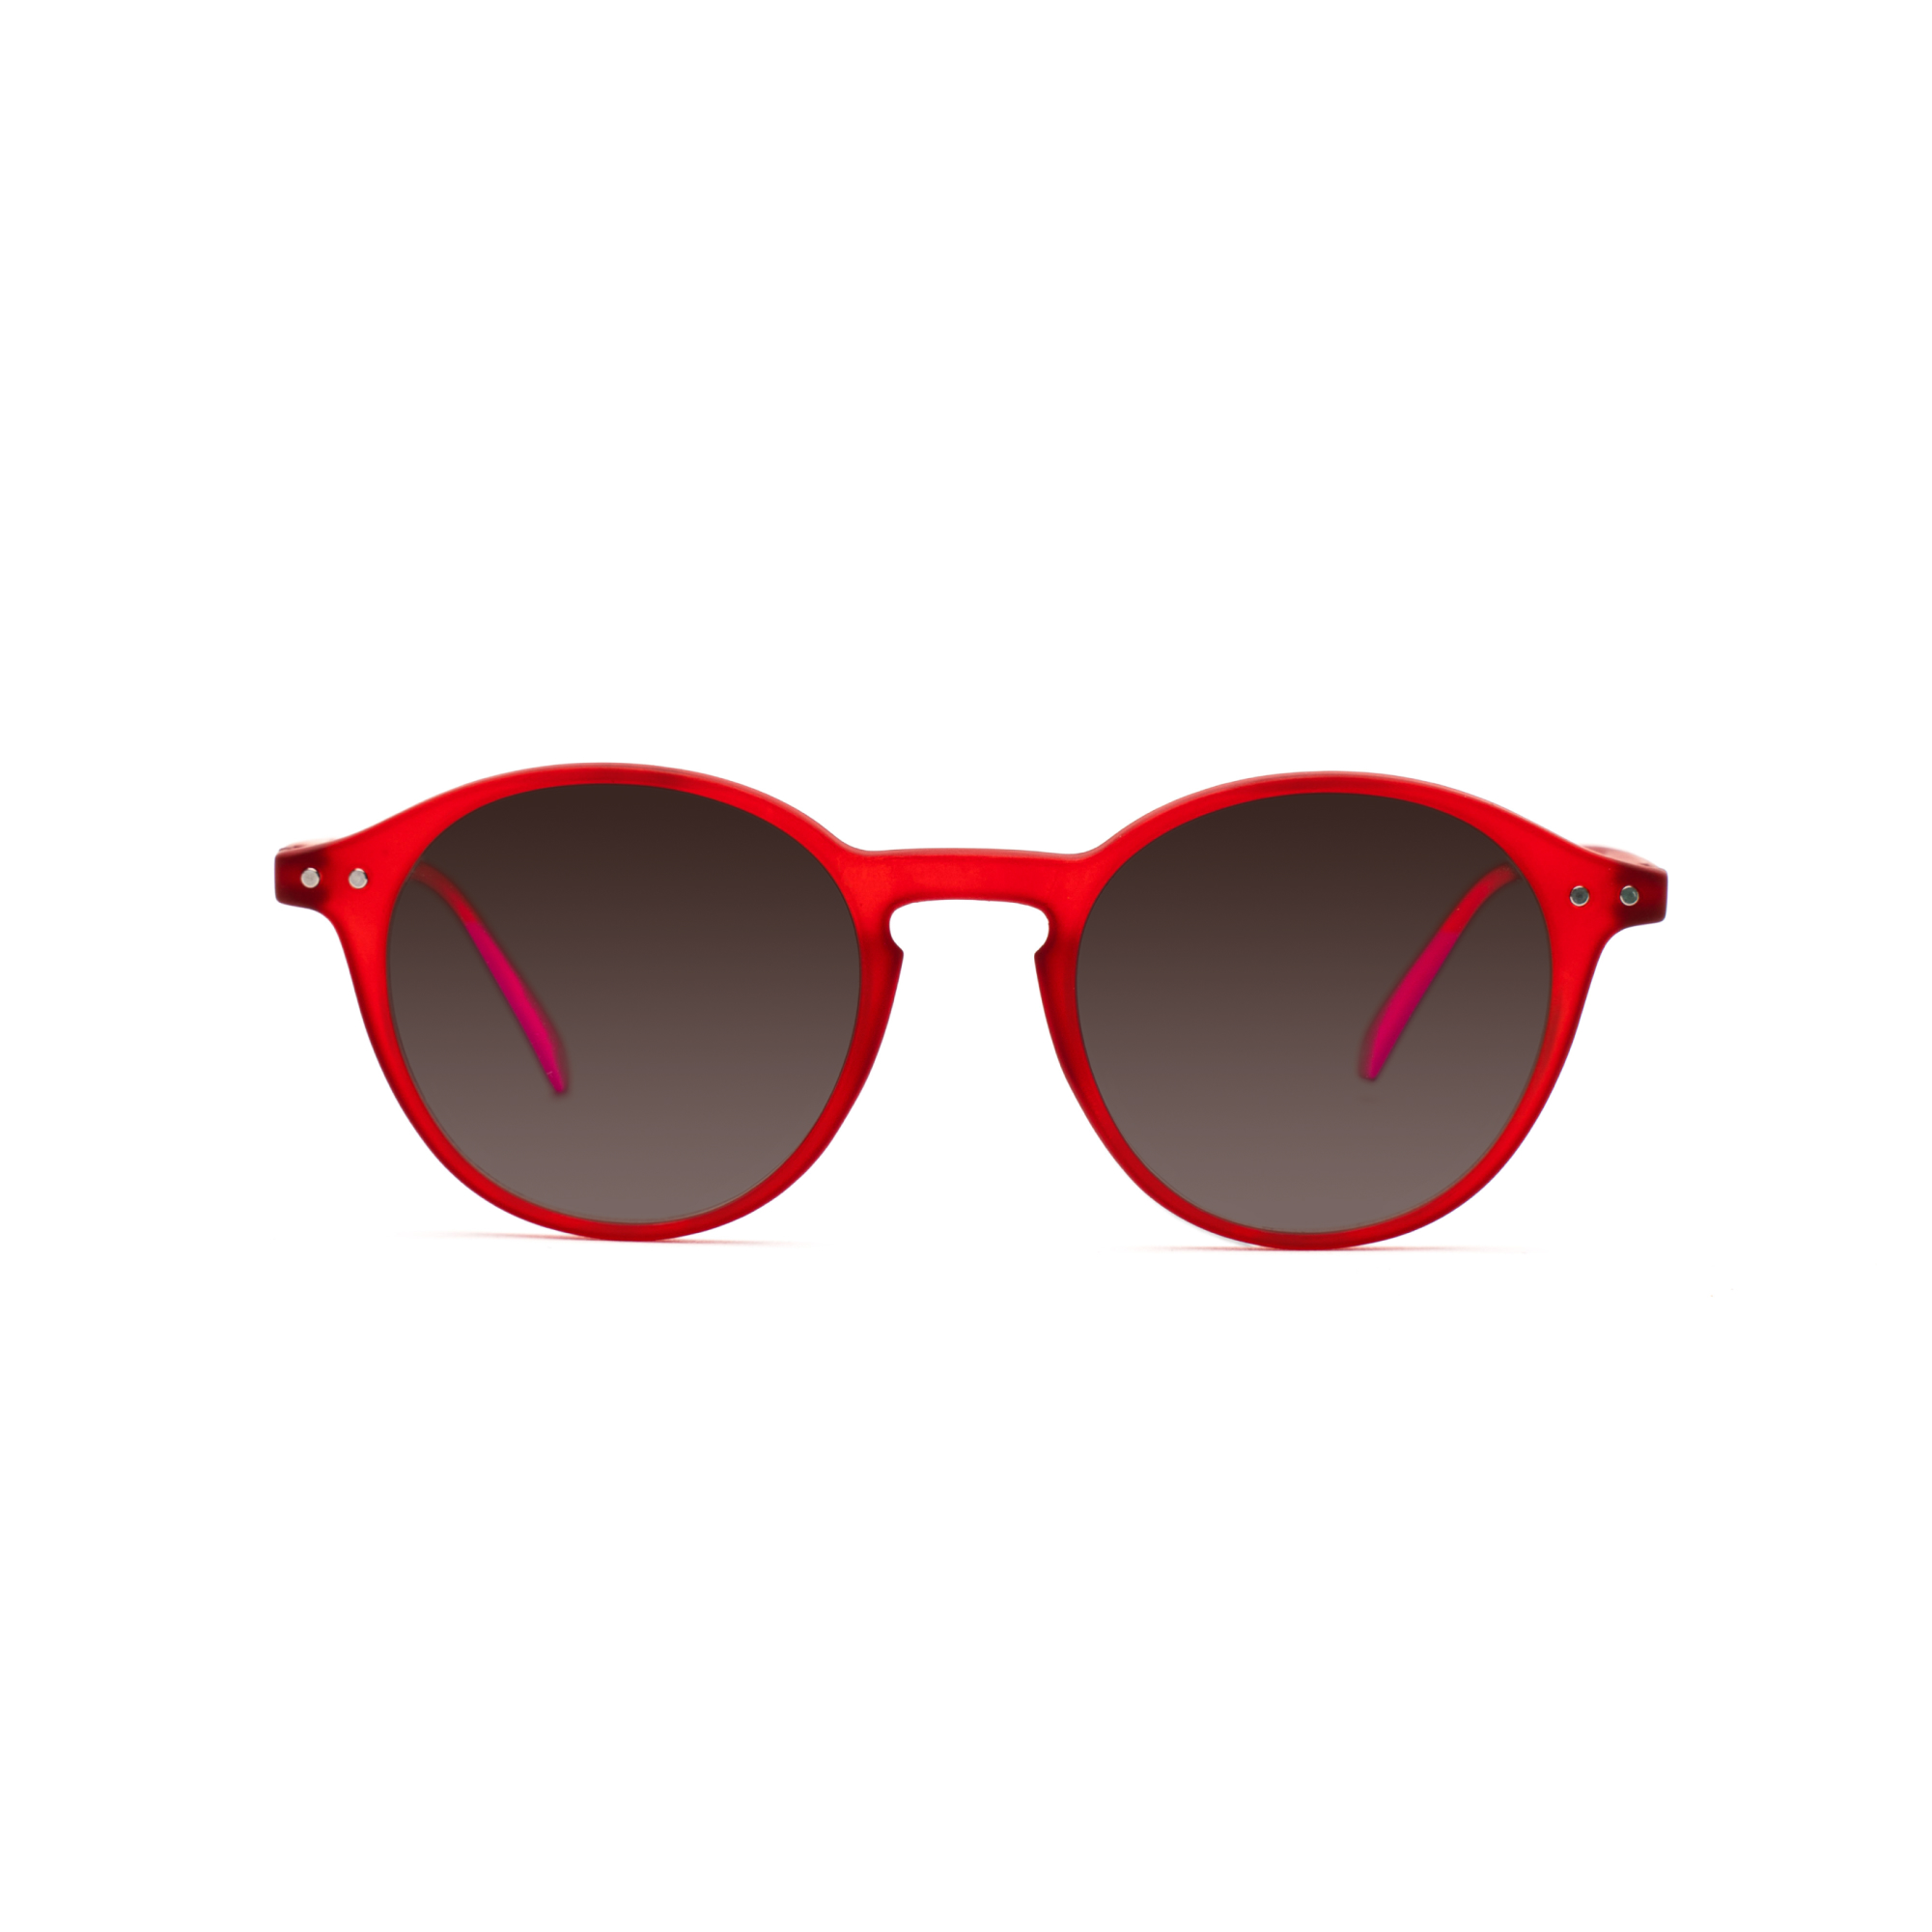 Women's transition glasses – Luca GEN 8 w - Red